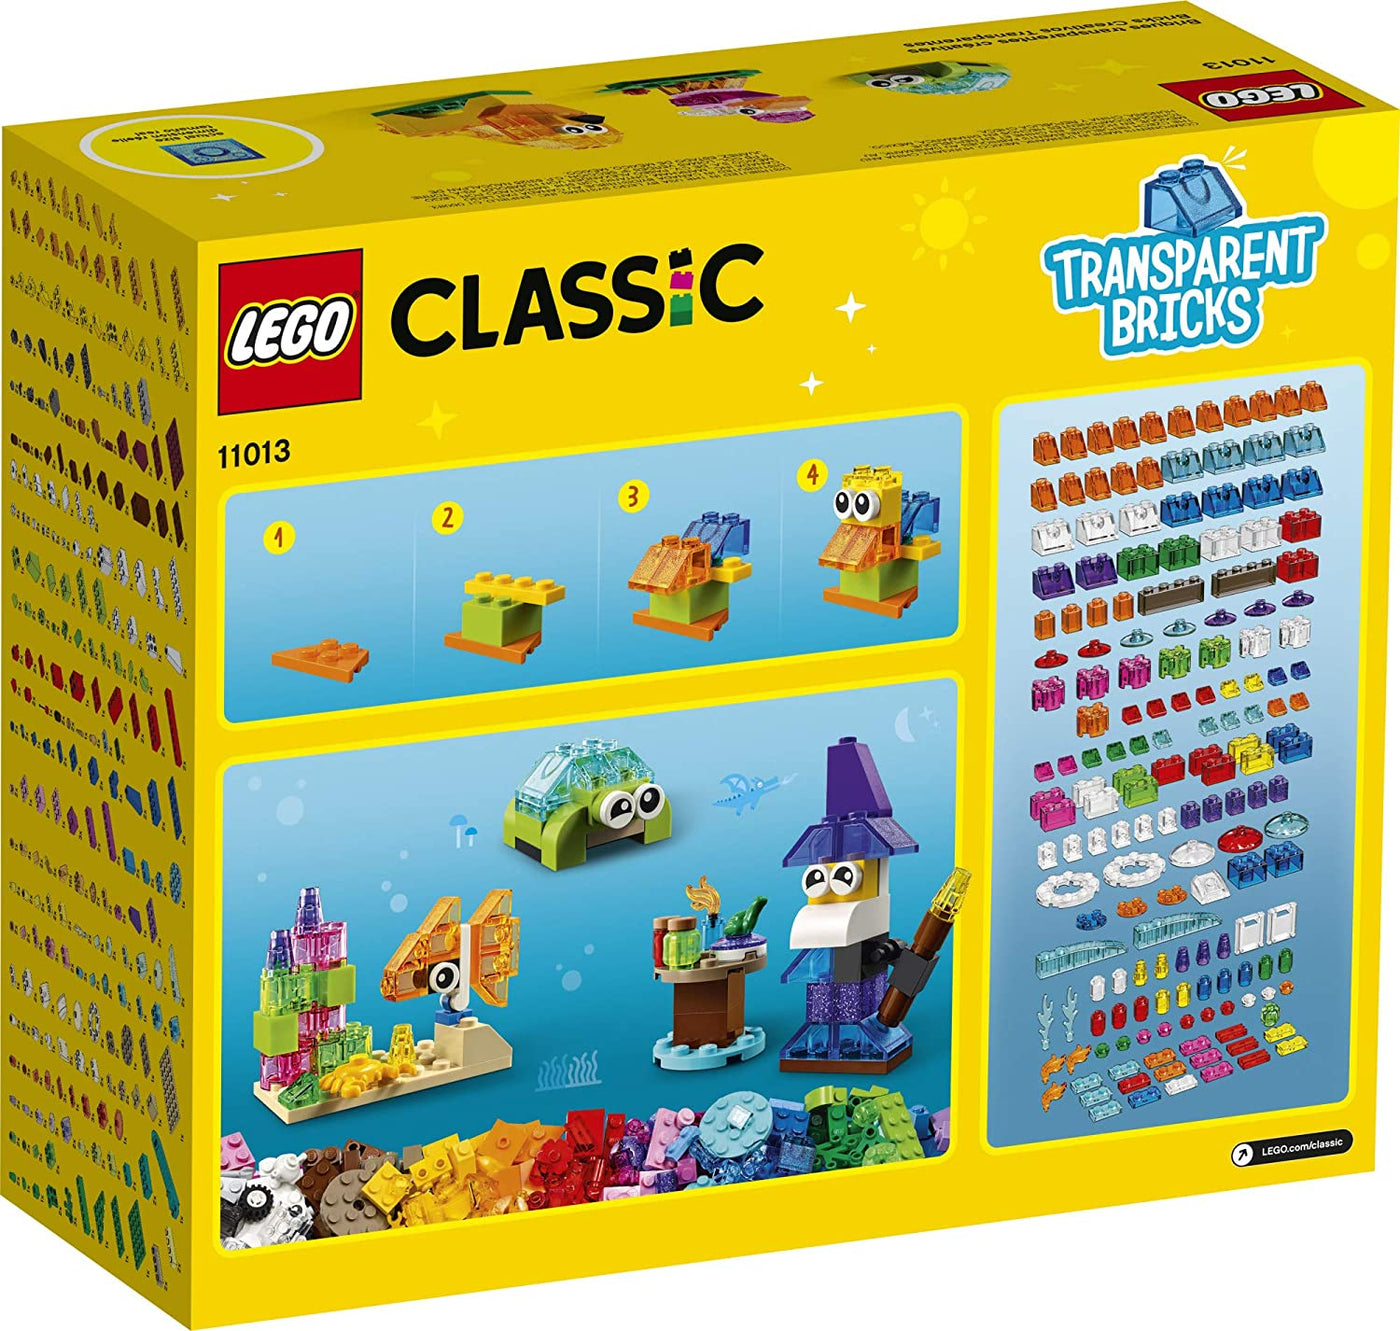 Creative Transparent Bricks, 11013 | LEGO Classic